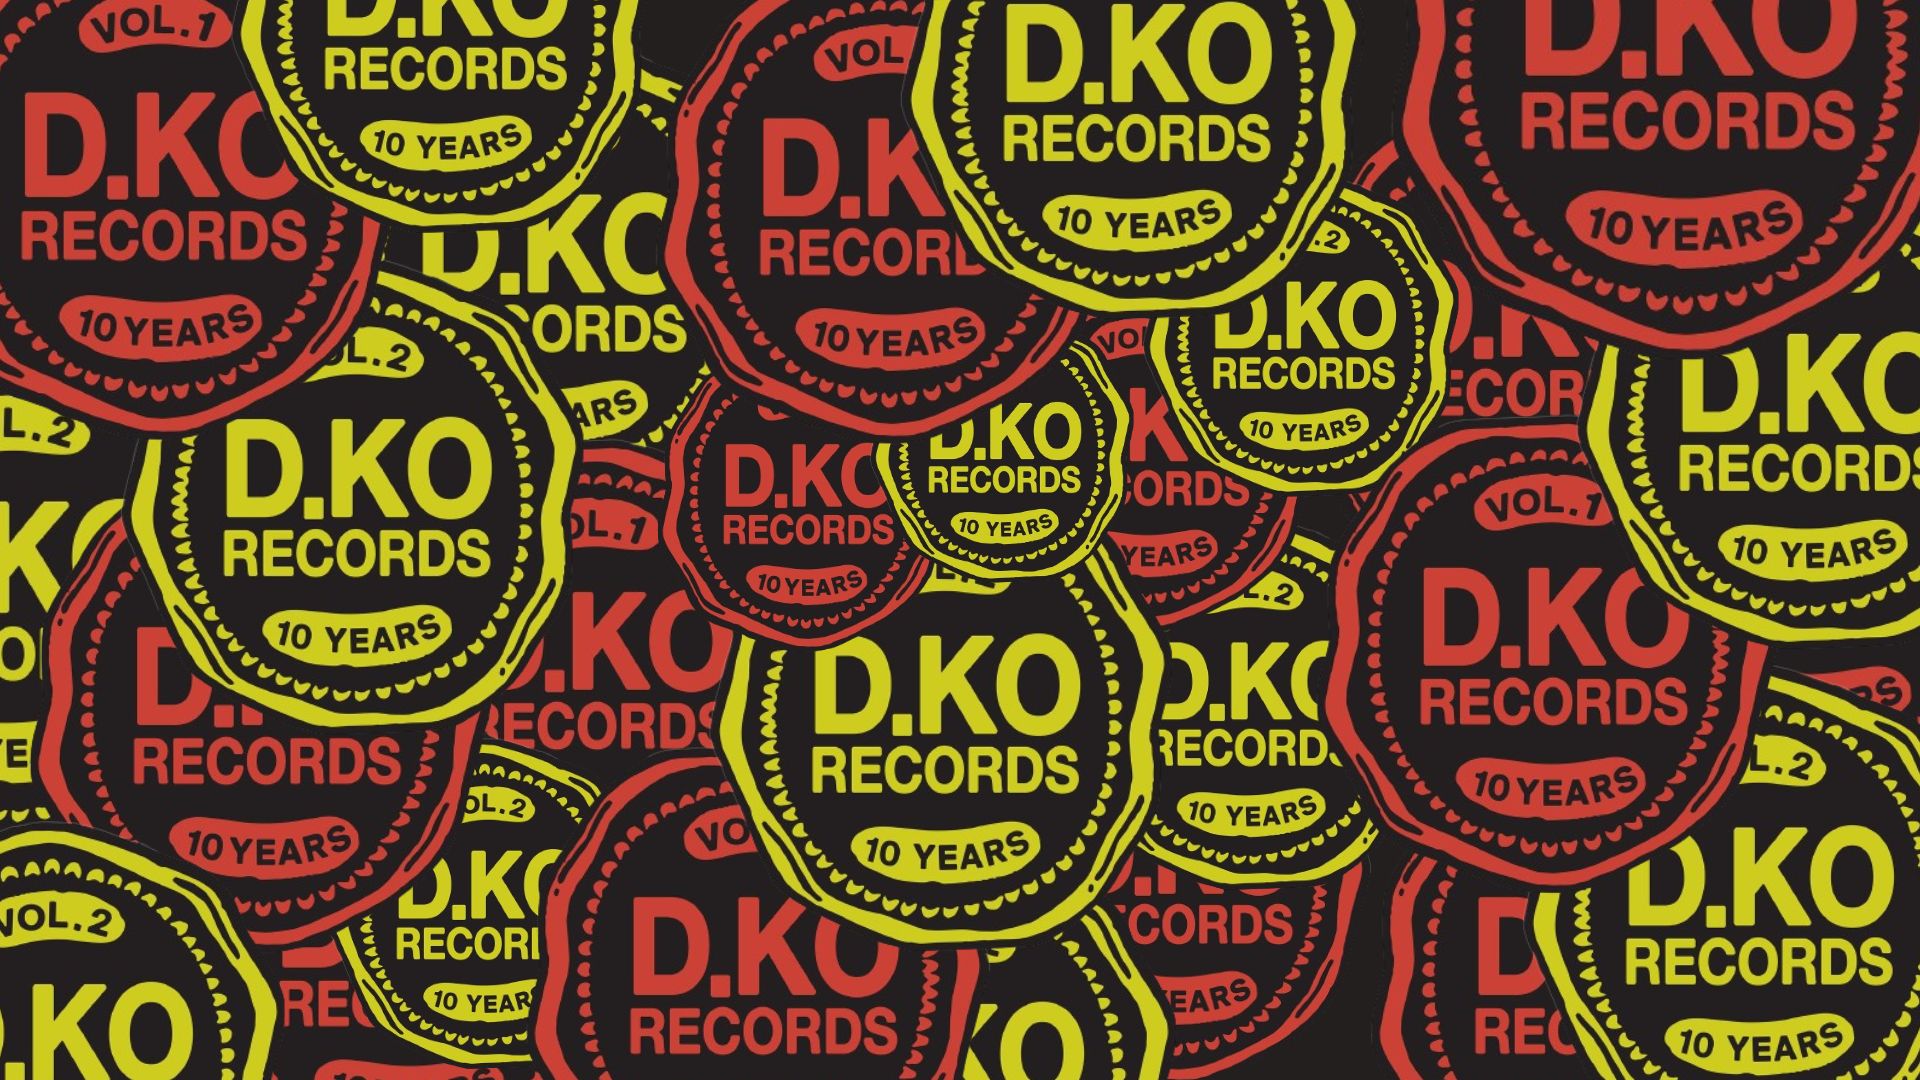 D.KO Records